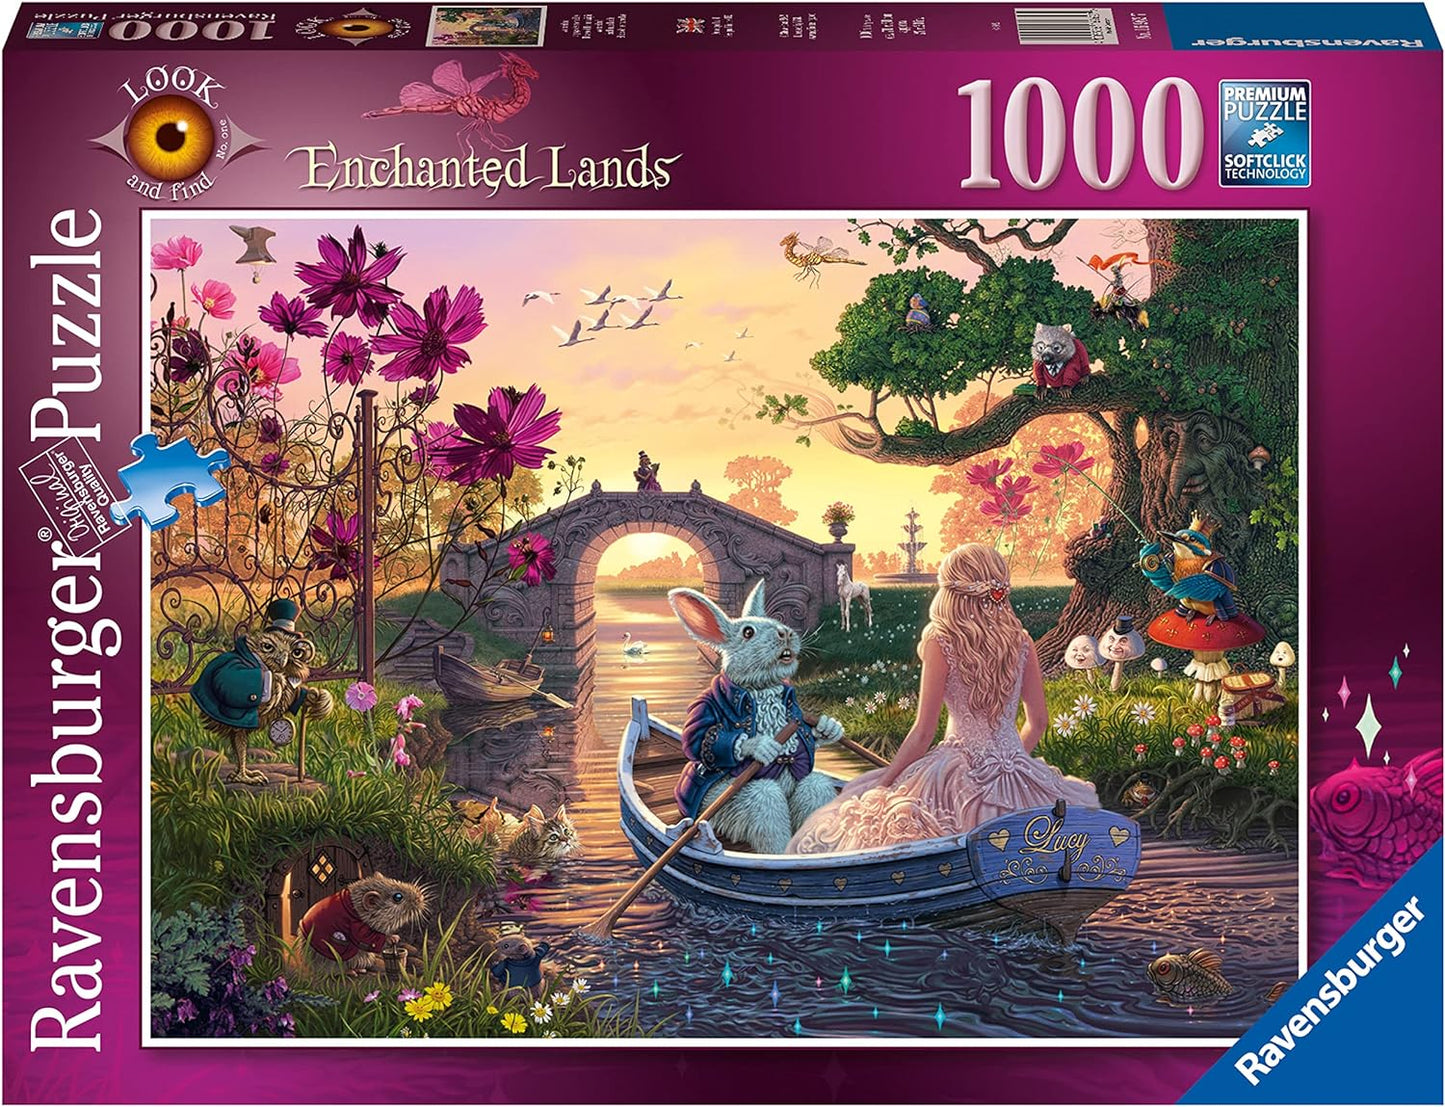 Enchanted Lands by Steve Read, 1000 Piece Puzzle